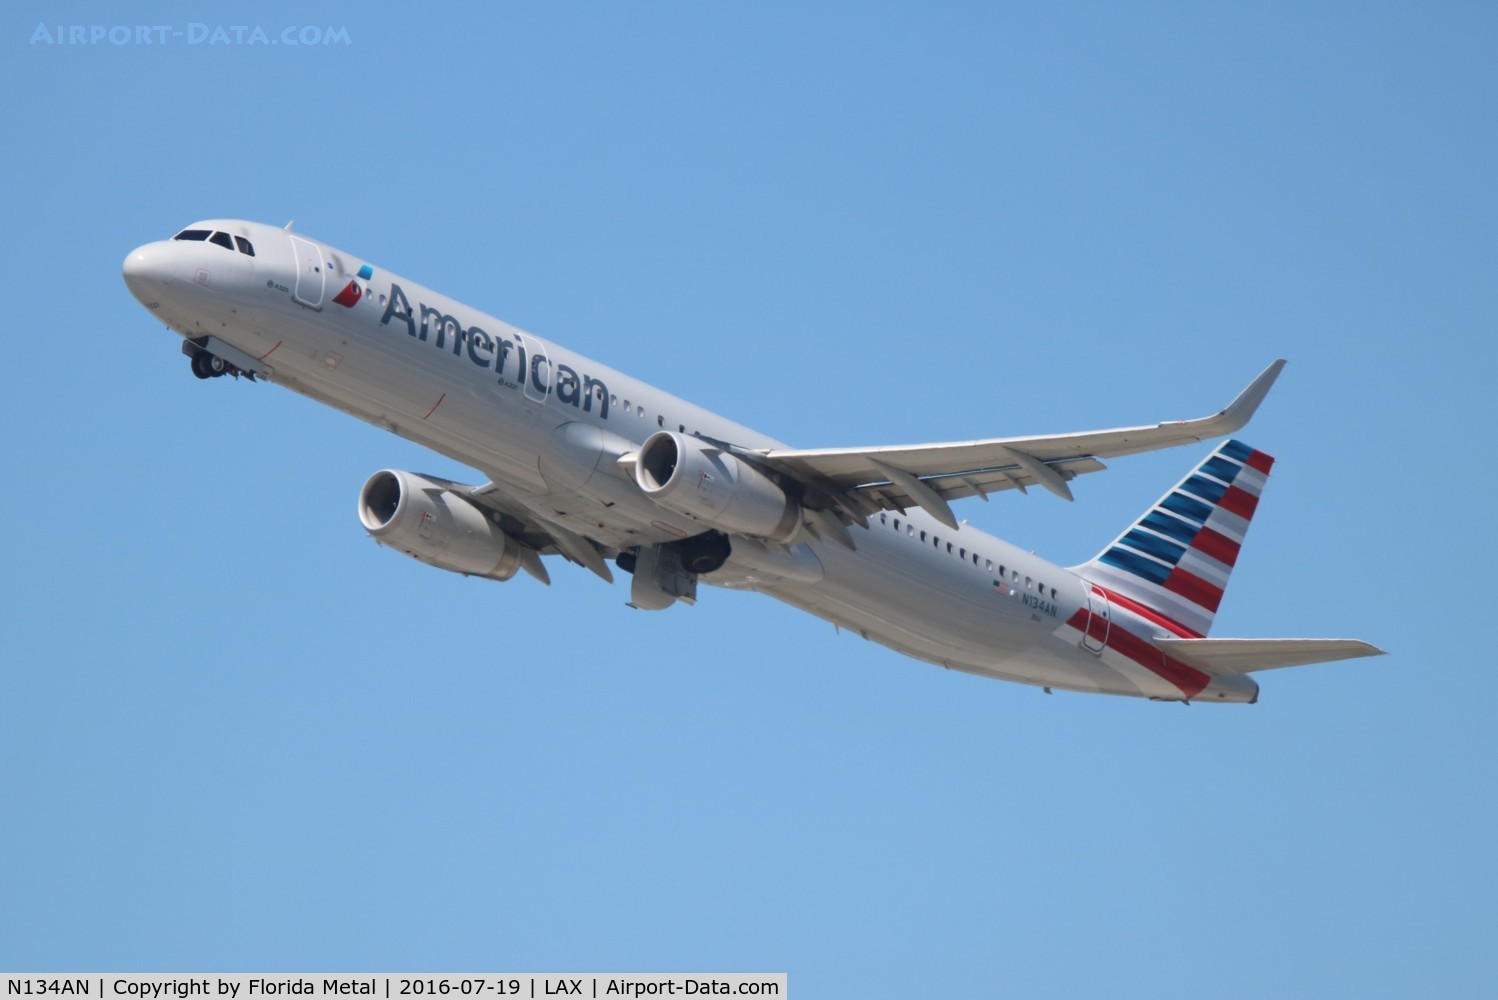 N134AN, 2015 Airbus A321-231 C/N 6495, American